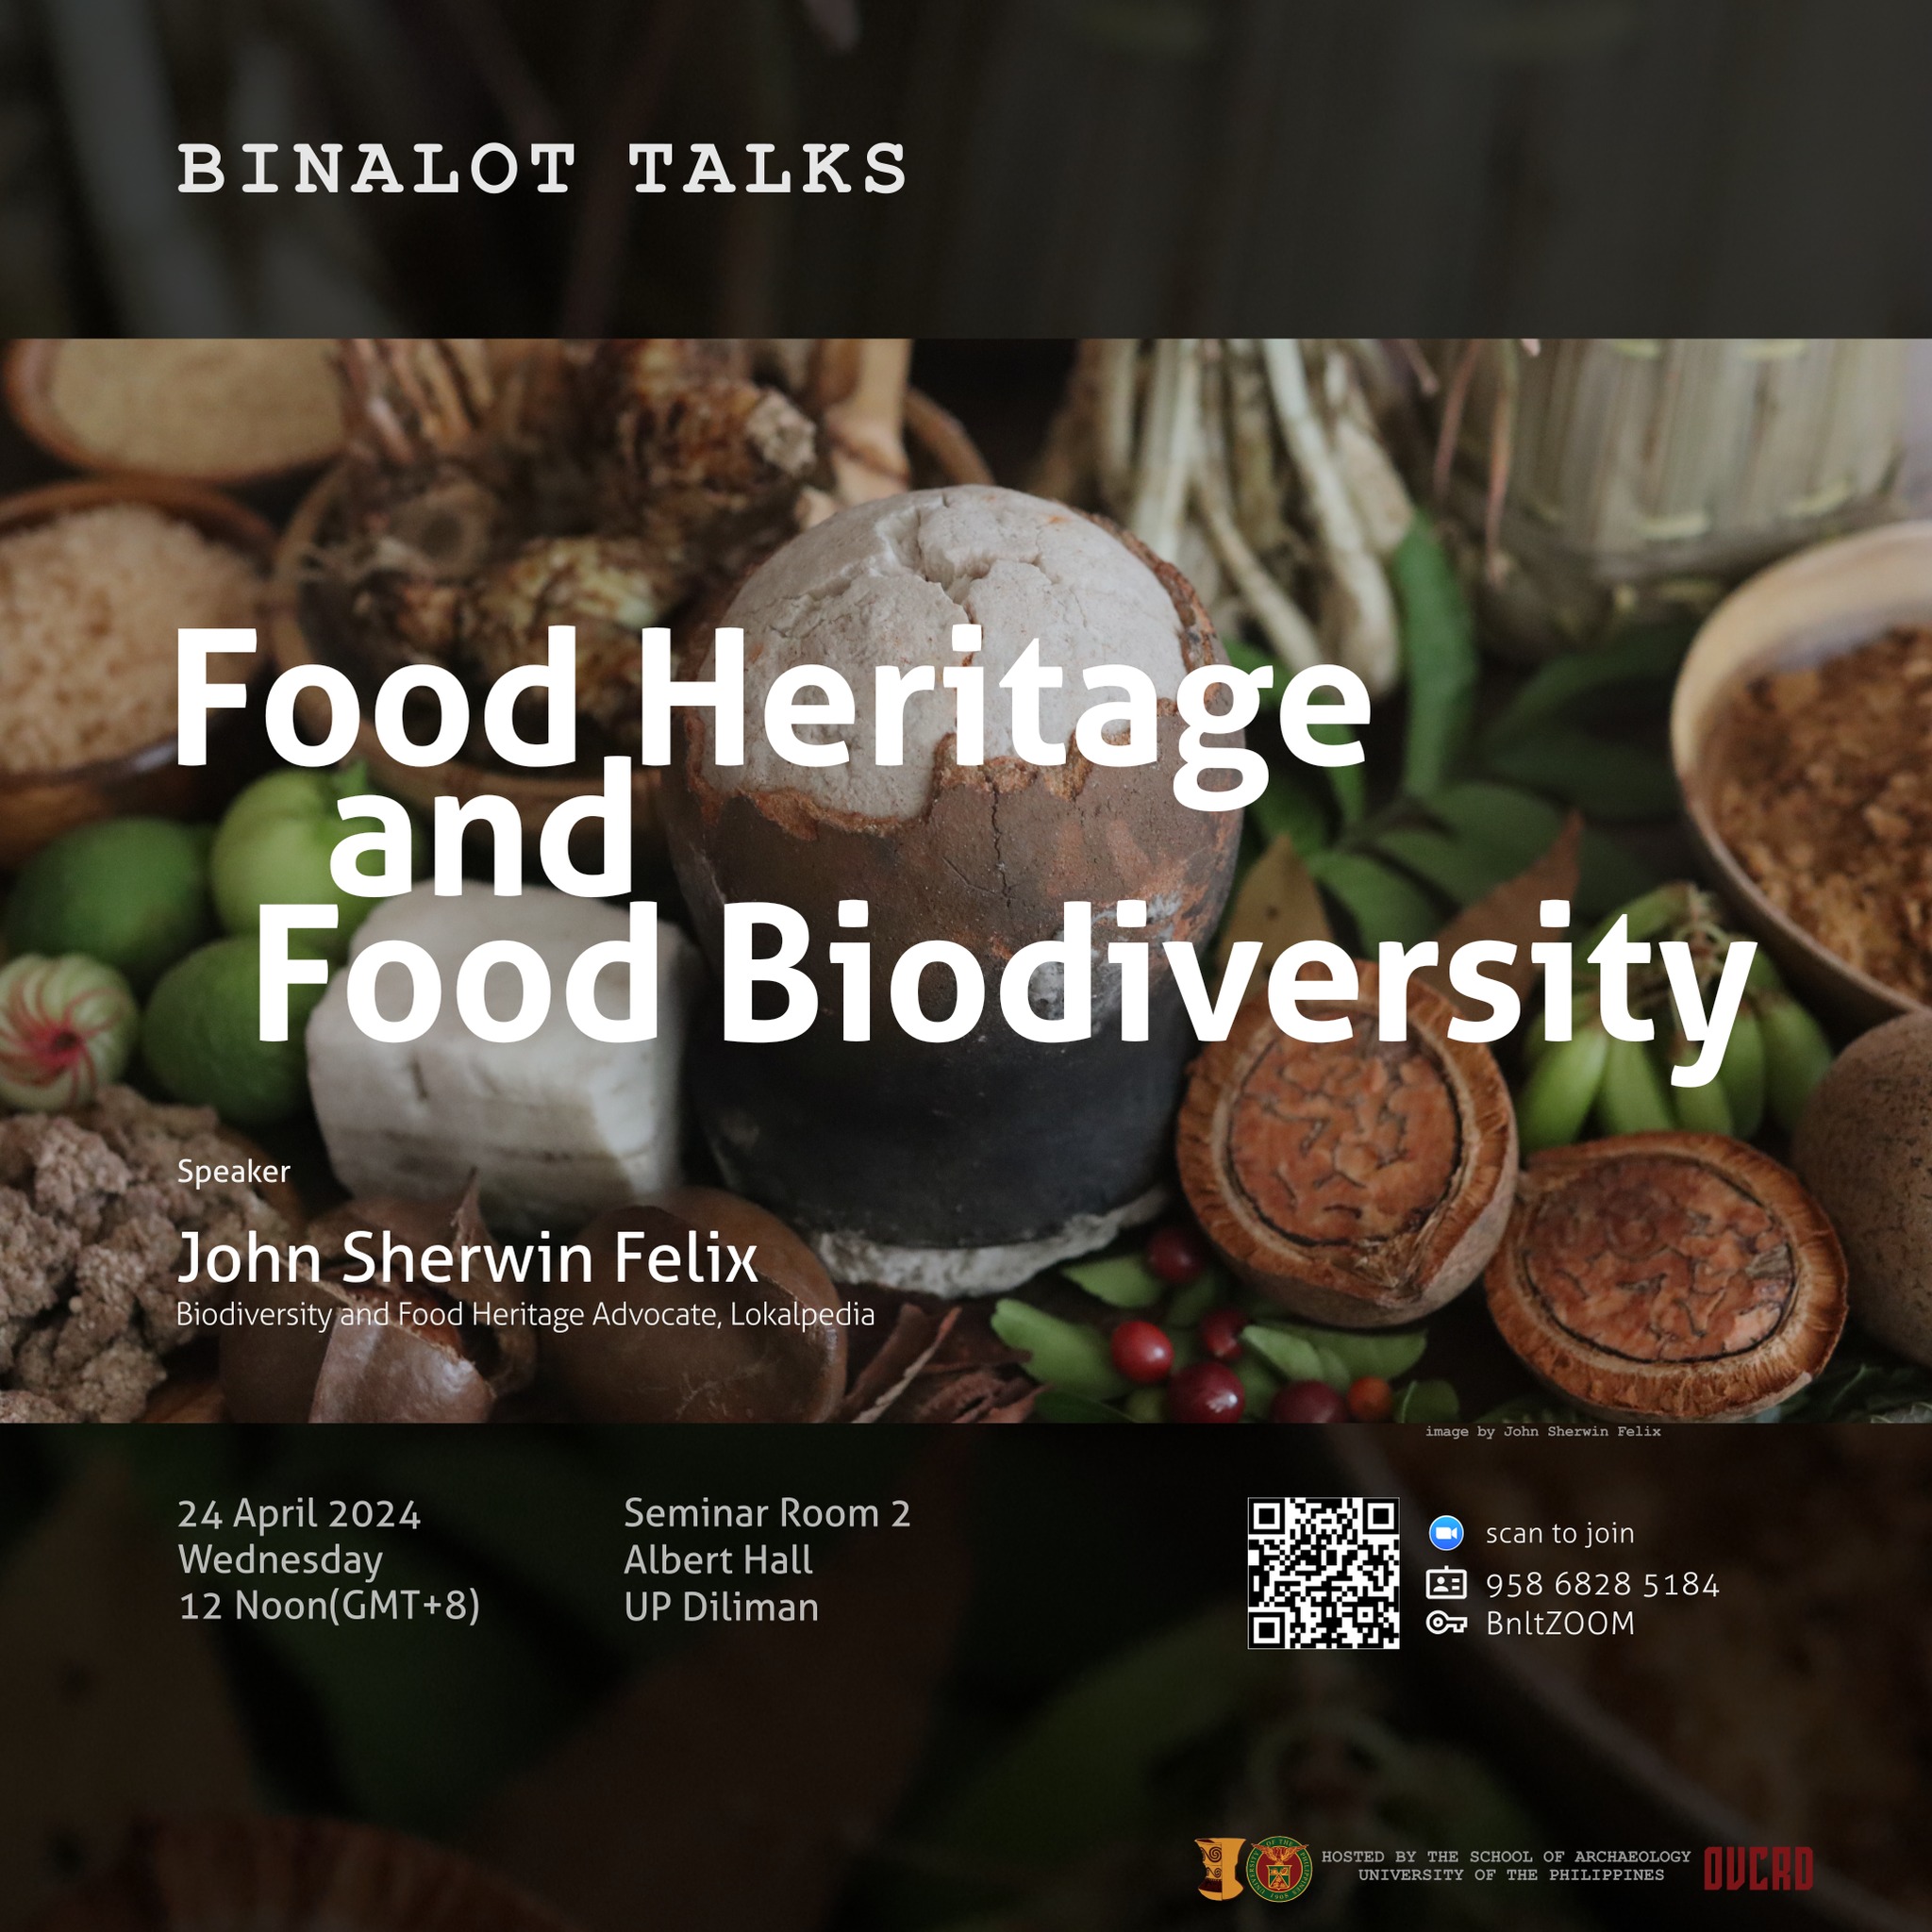 Food Heritage and Food Biodiversity